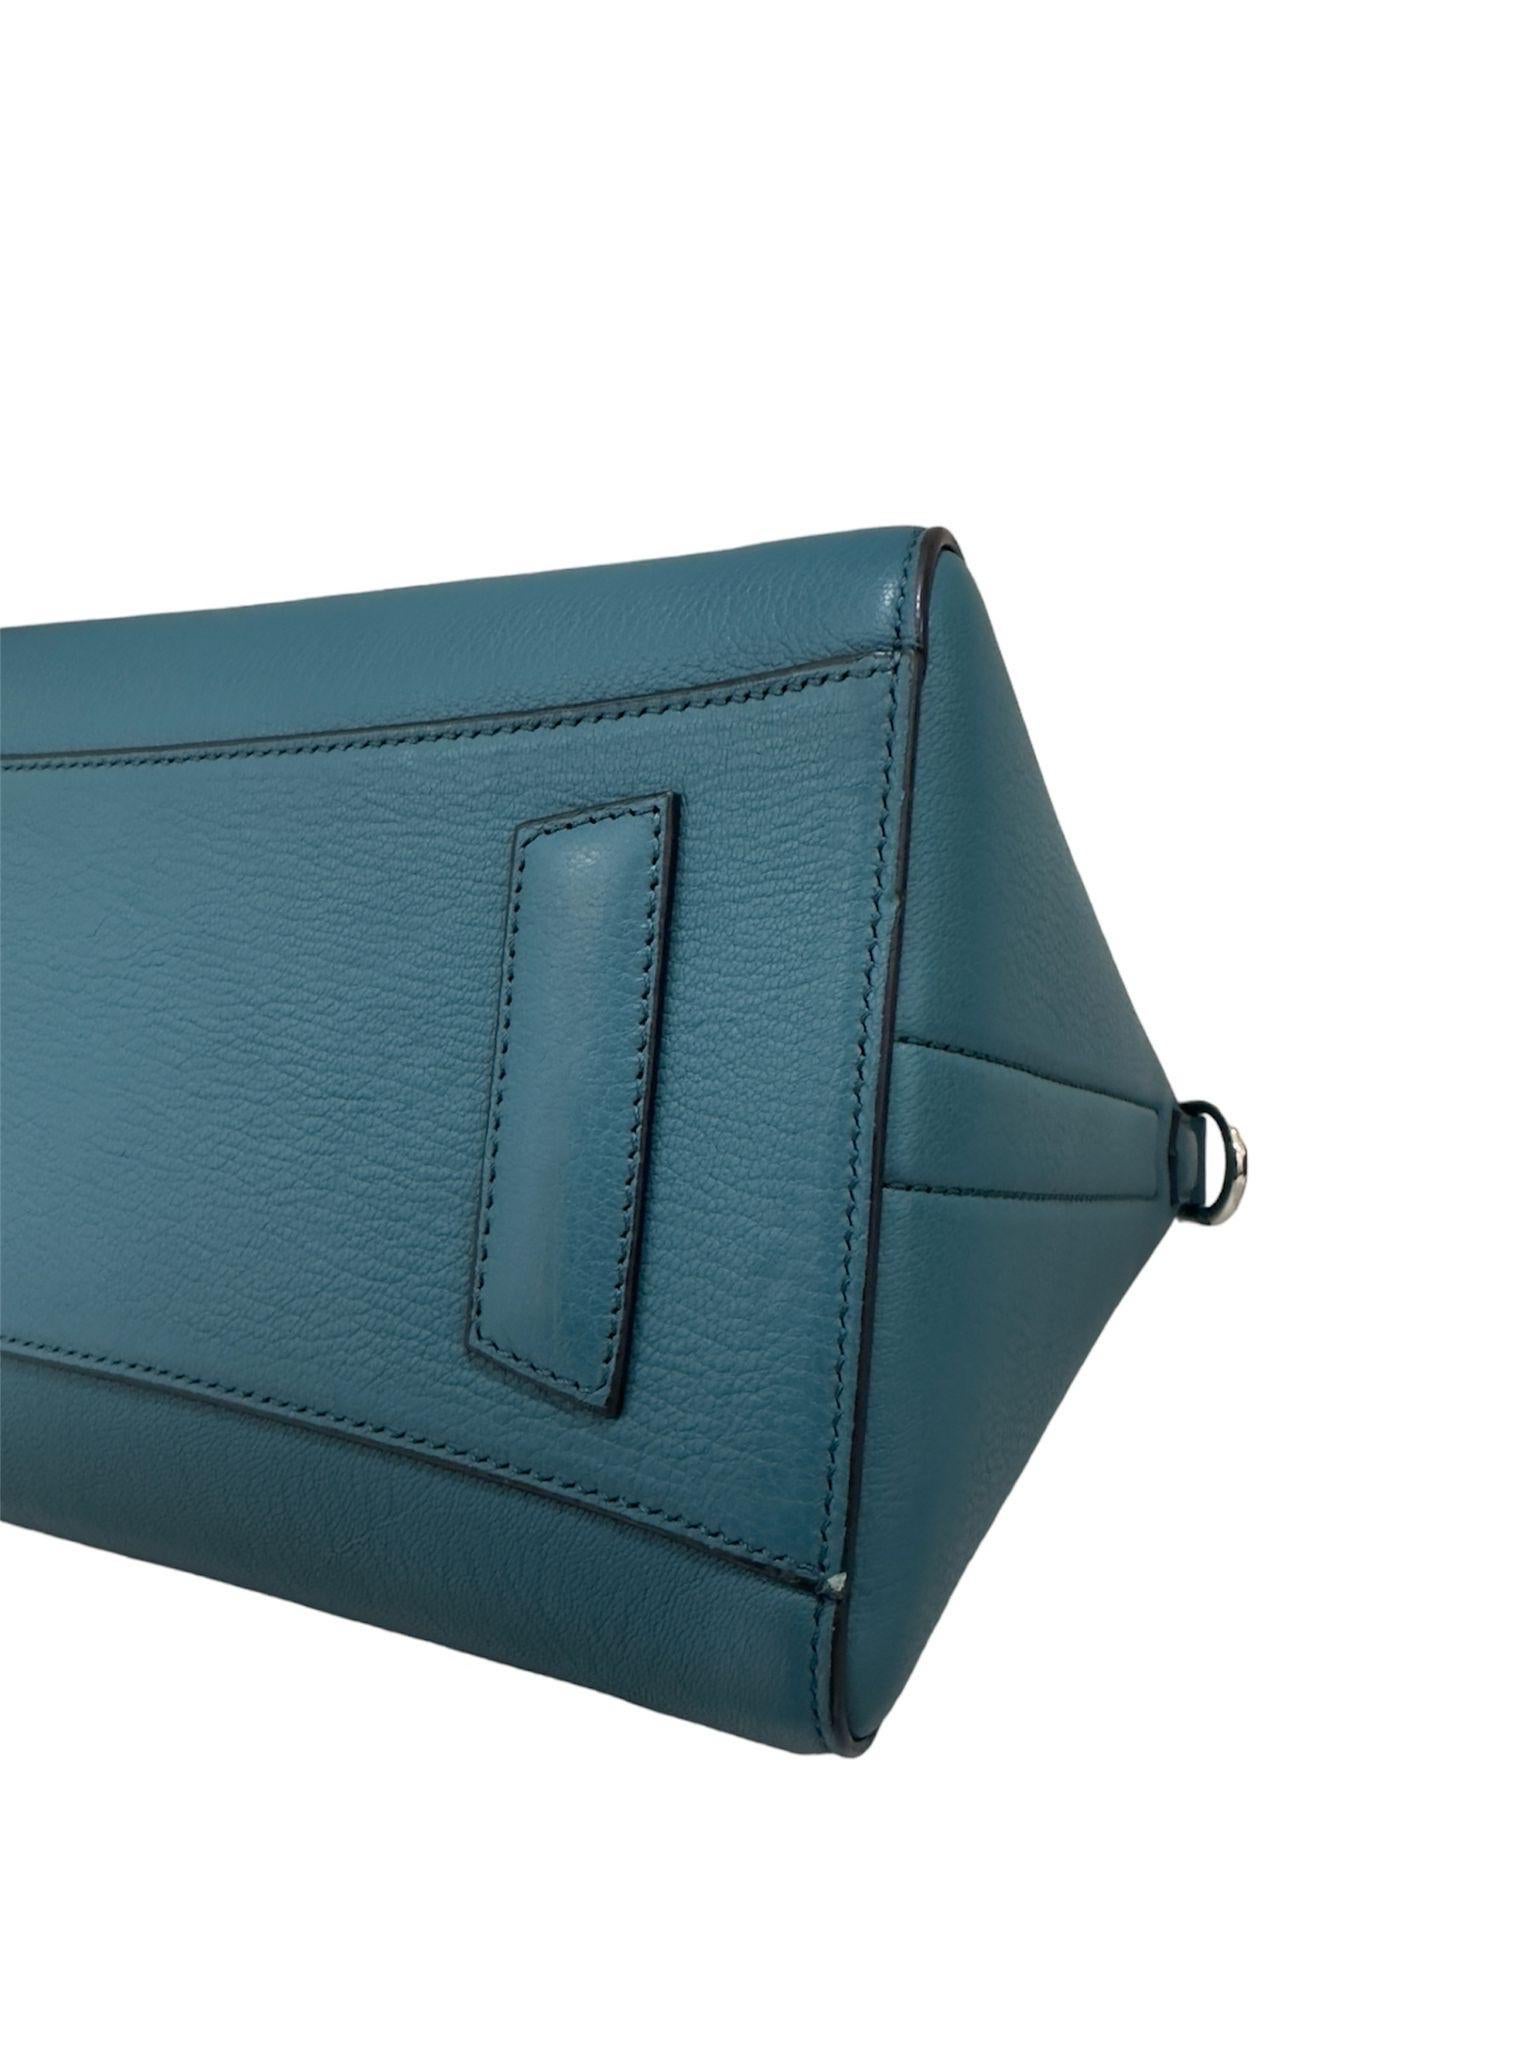 Givenchy Antigona Small Blu Petrolio Borsa A Spalla For Sale 3